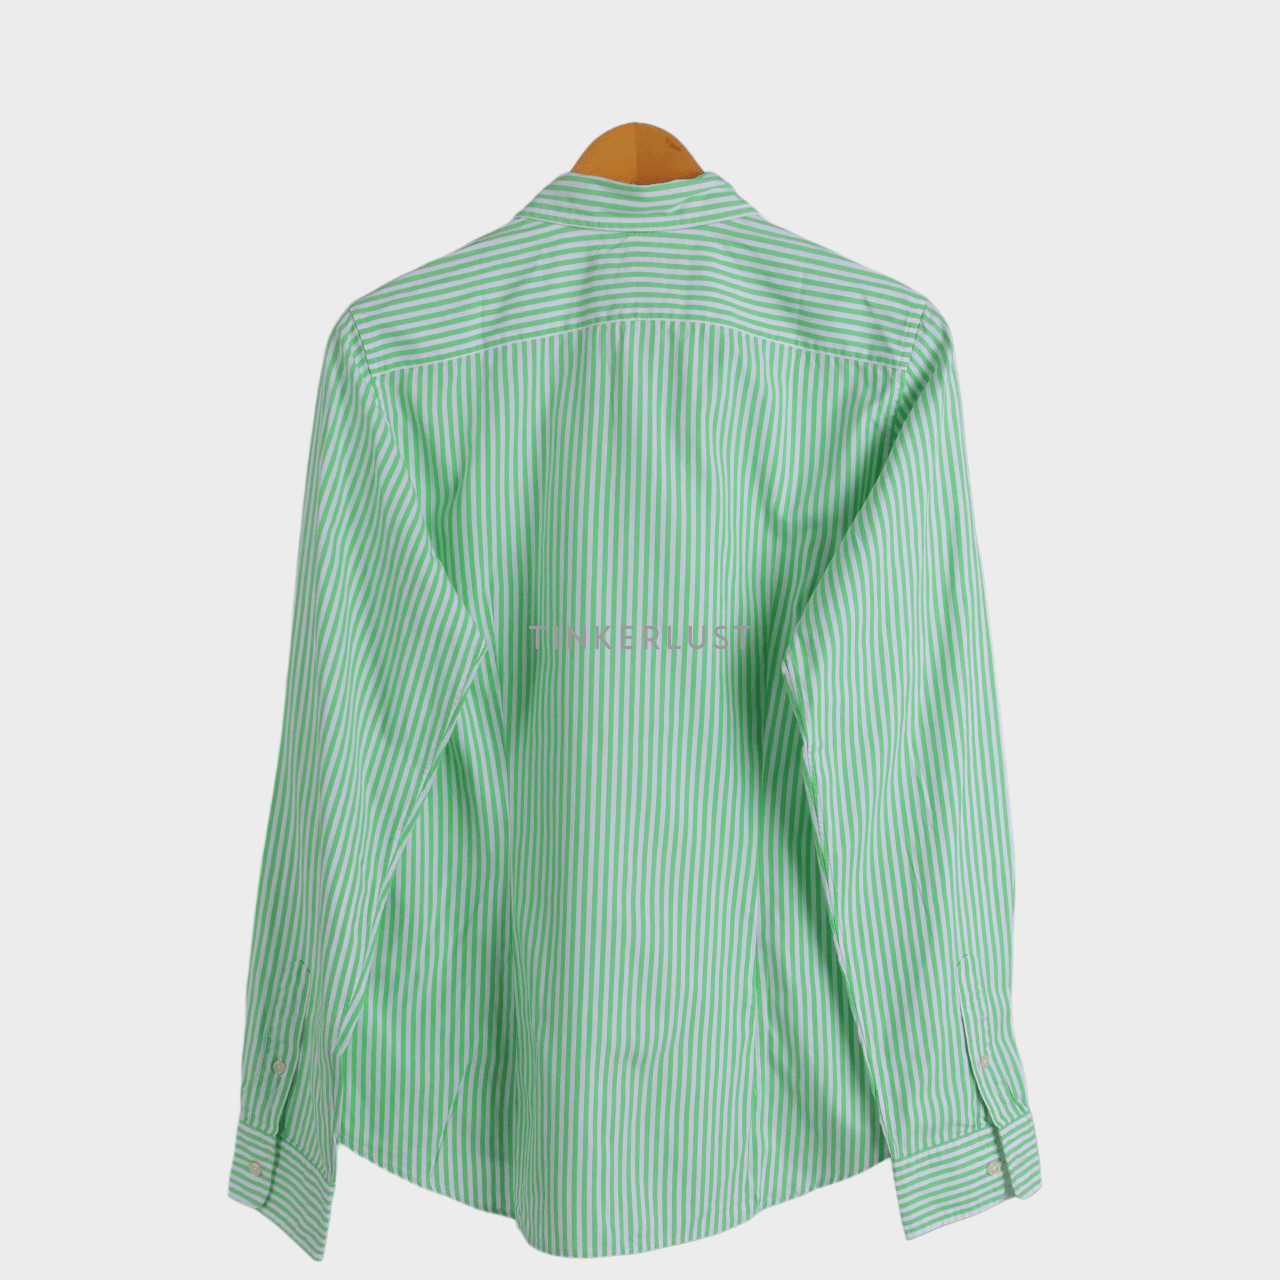 Ralph Lauren Green & White Stripes Shirt